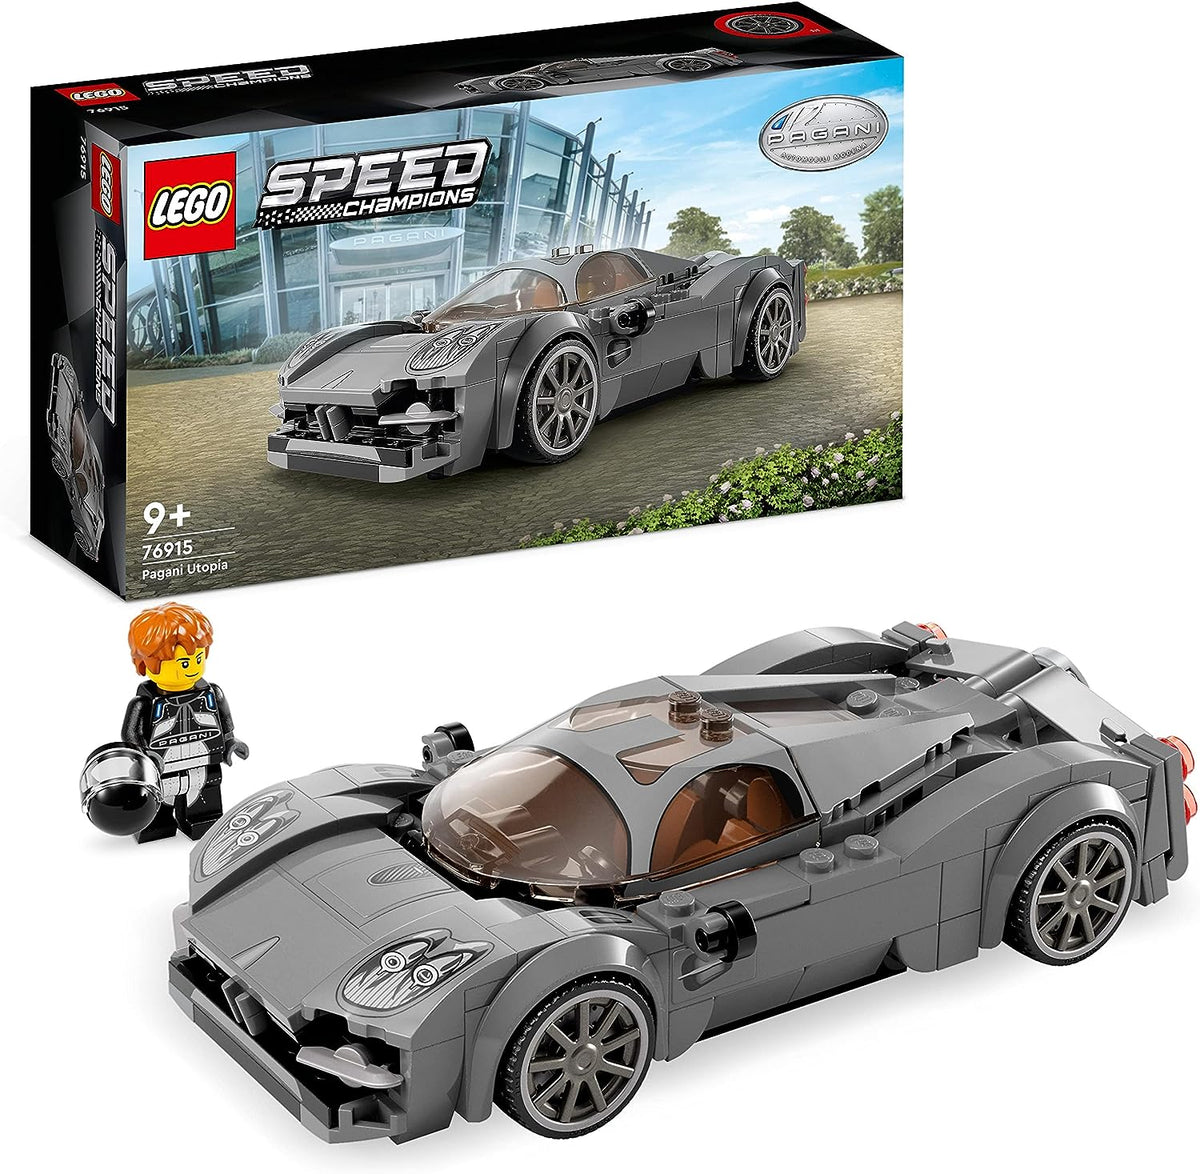 LEGO Speed Champions 76915 Pagani Utopia Model Race Car Toy